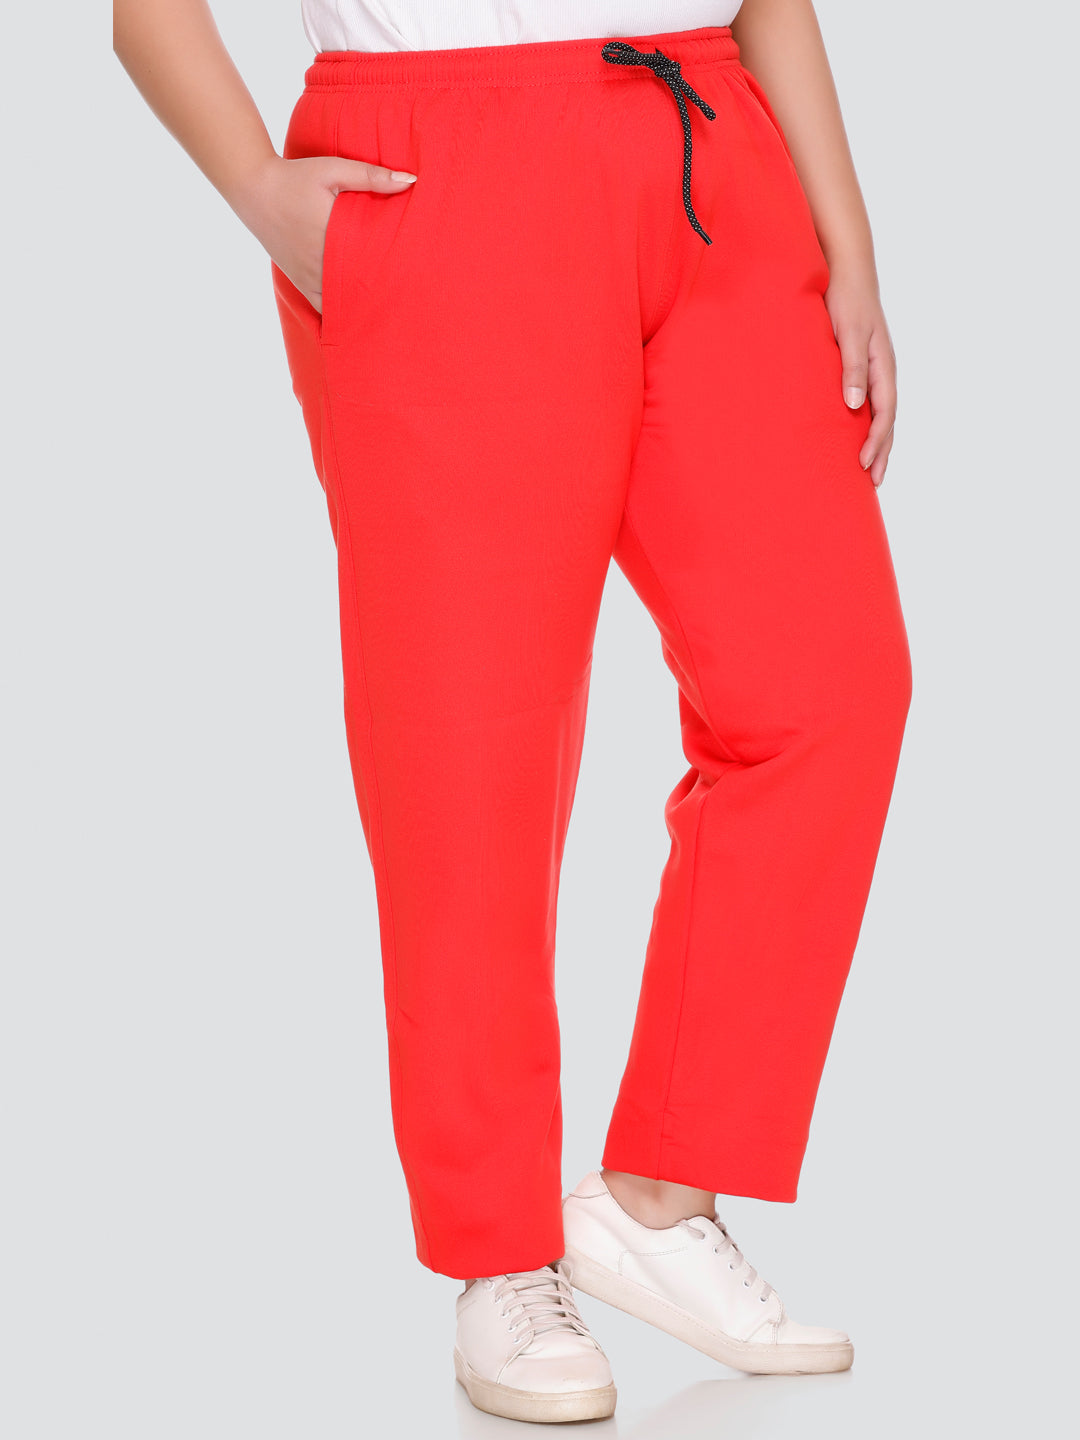 Top brand Maroon red cotton pants in India | Priya Chaudhary